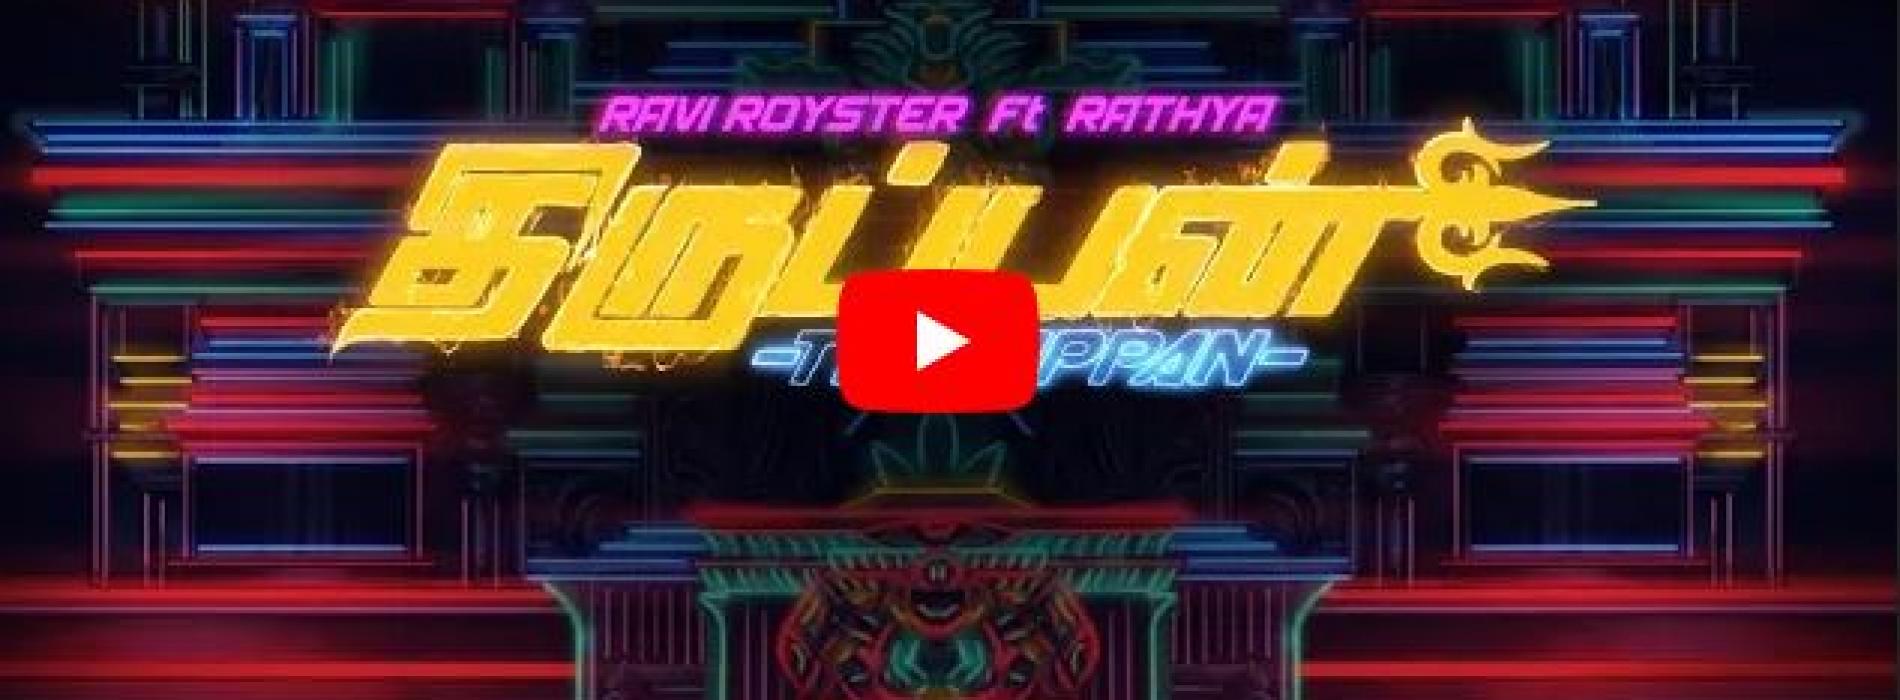 New Music : Ravi Royster – Thiruppan (திருப்பன்) Ft Rathya [Official Lyric Video]